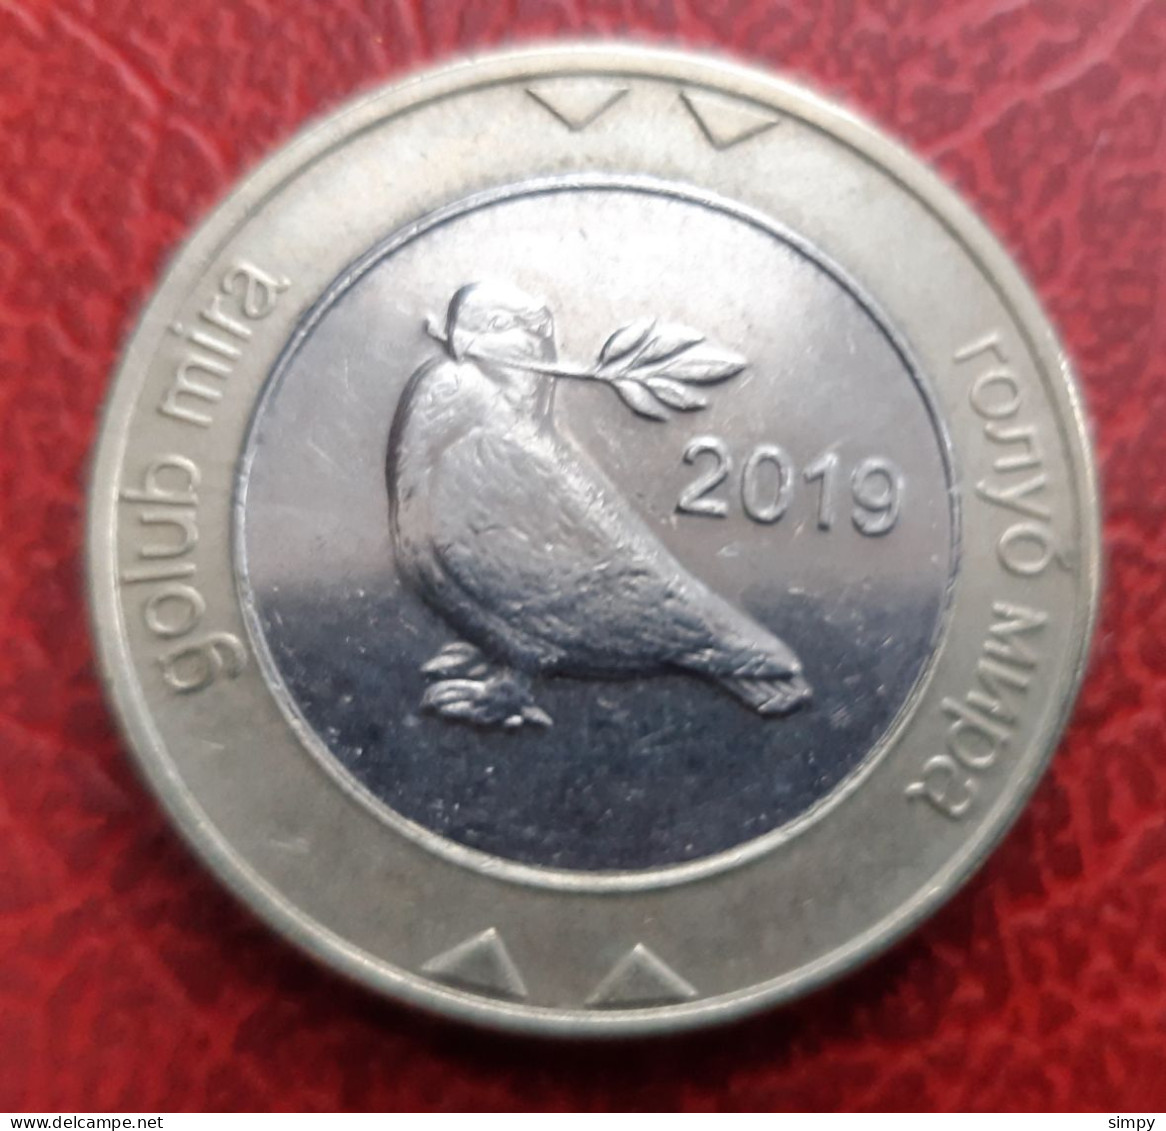 BOSNIA & HERZEGOVINA 2 Konvertibile Marke 2019 Pigeon Dove Bimetal Coin - Bosnia And Herzegovina